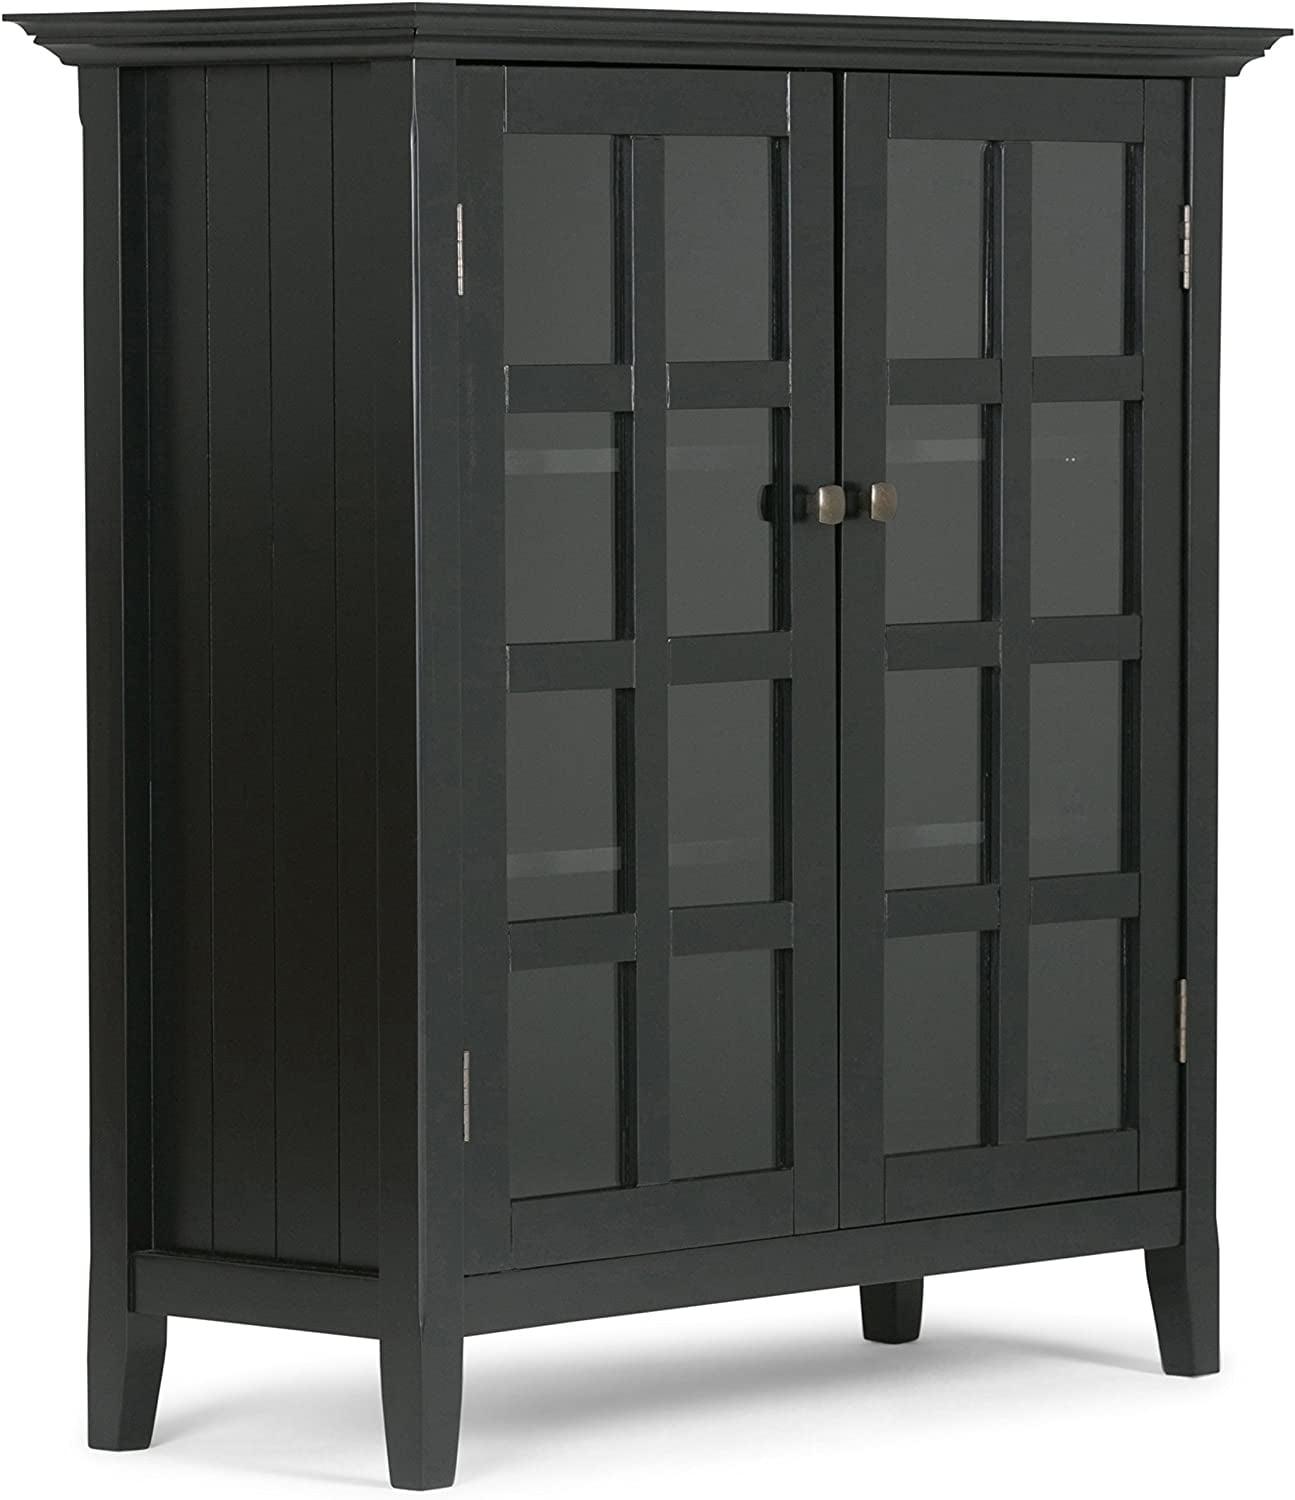 Acadian 39" Black Solid Pine Freestanding Storage Cupboard with Adjustable Shelves